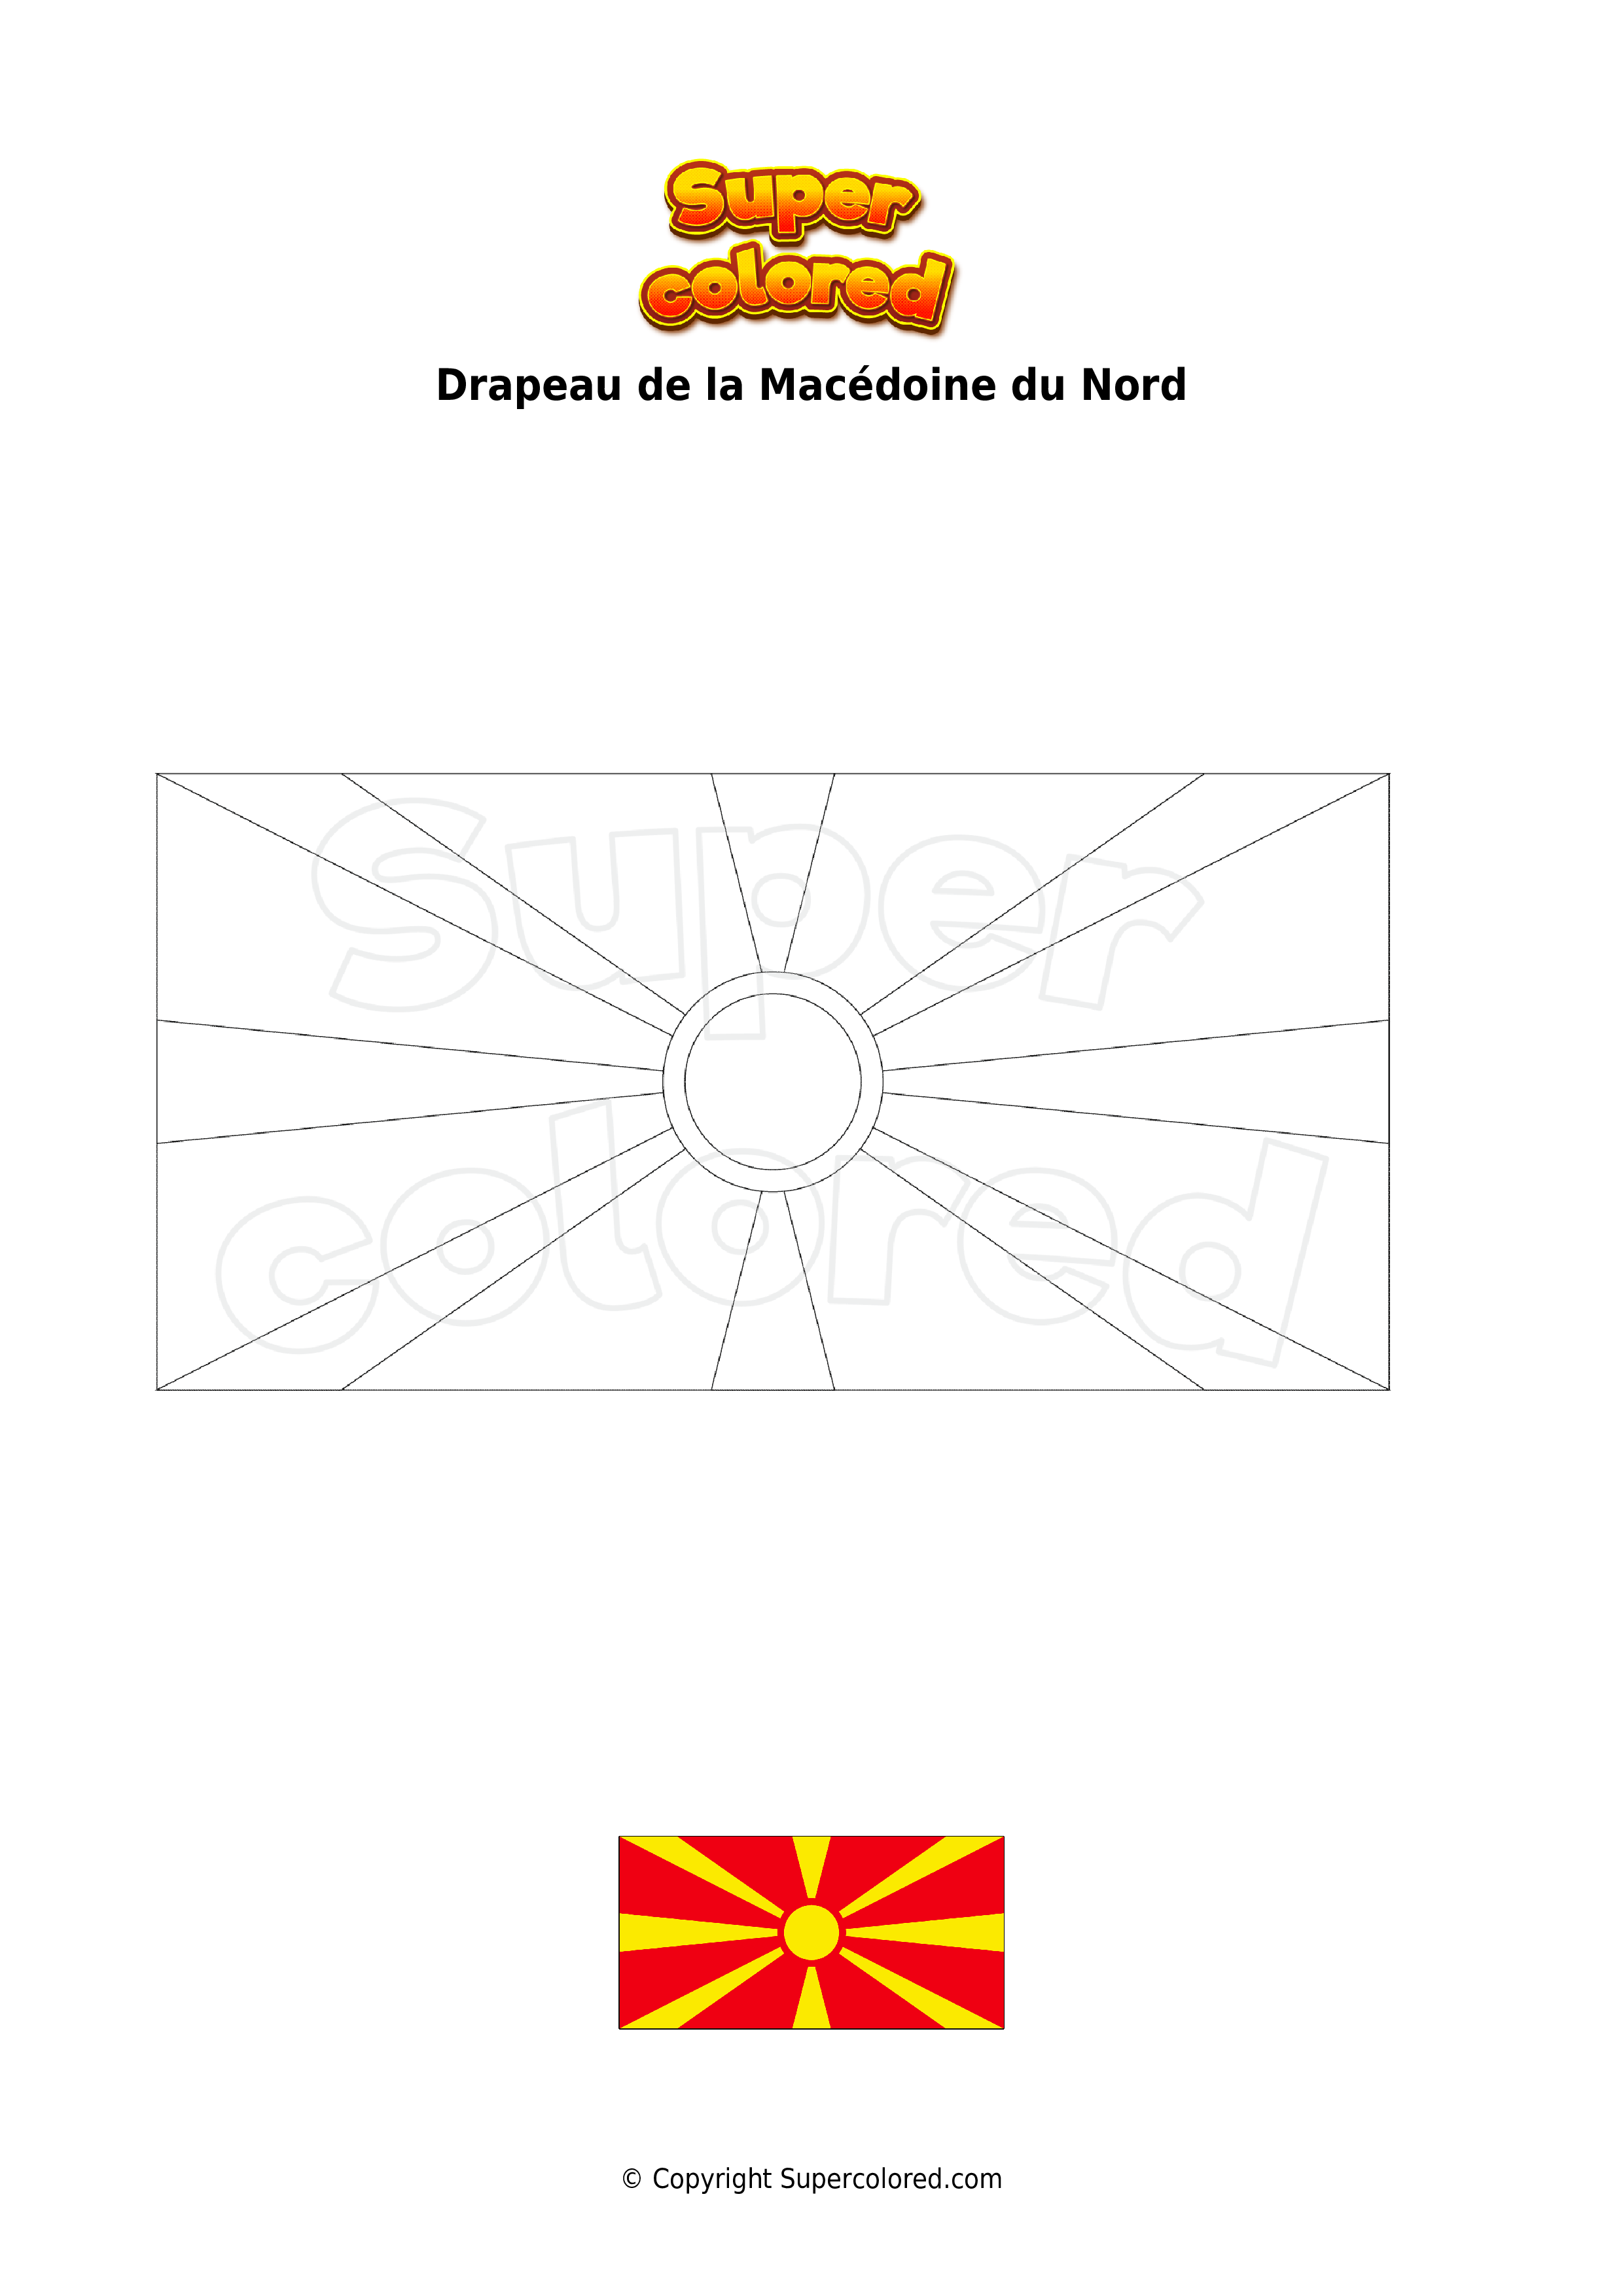 Coloriage Drapeau De La Macedoine Du Nord Supercolored Com